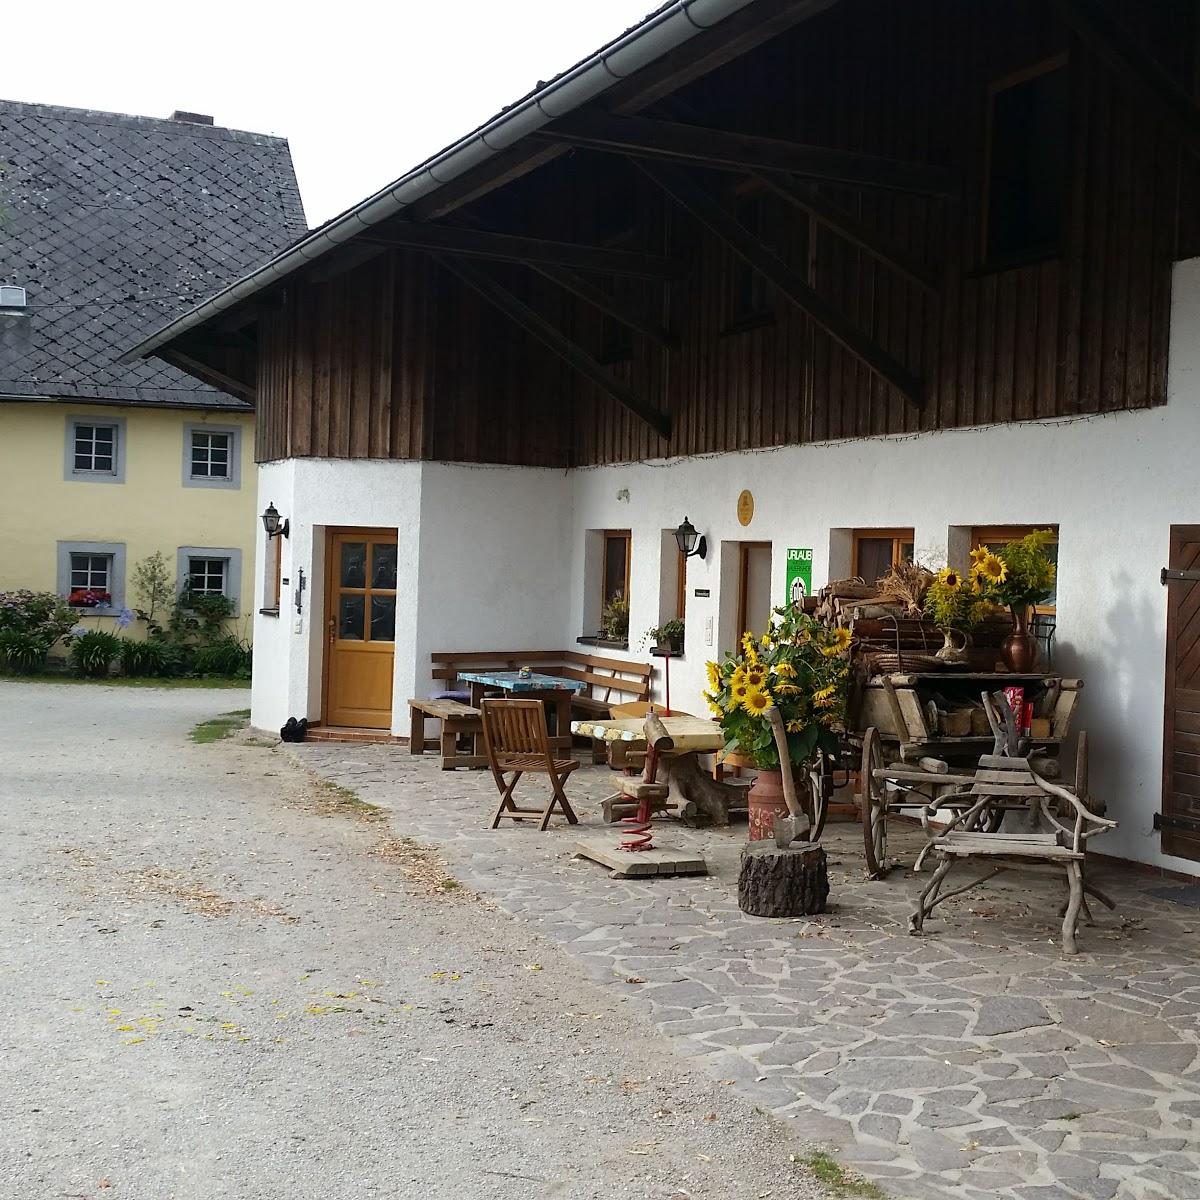 Restaurant "Ferienhof Gottelhof" in Hollfeld